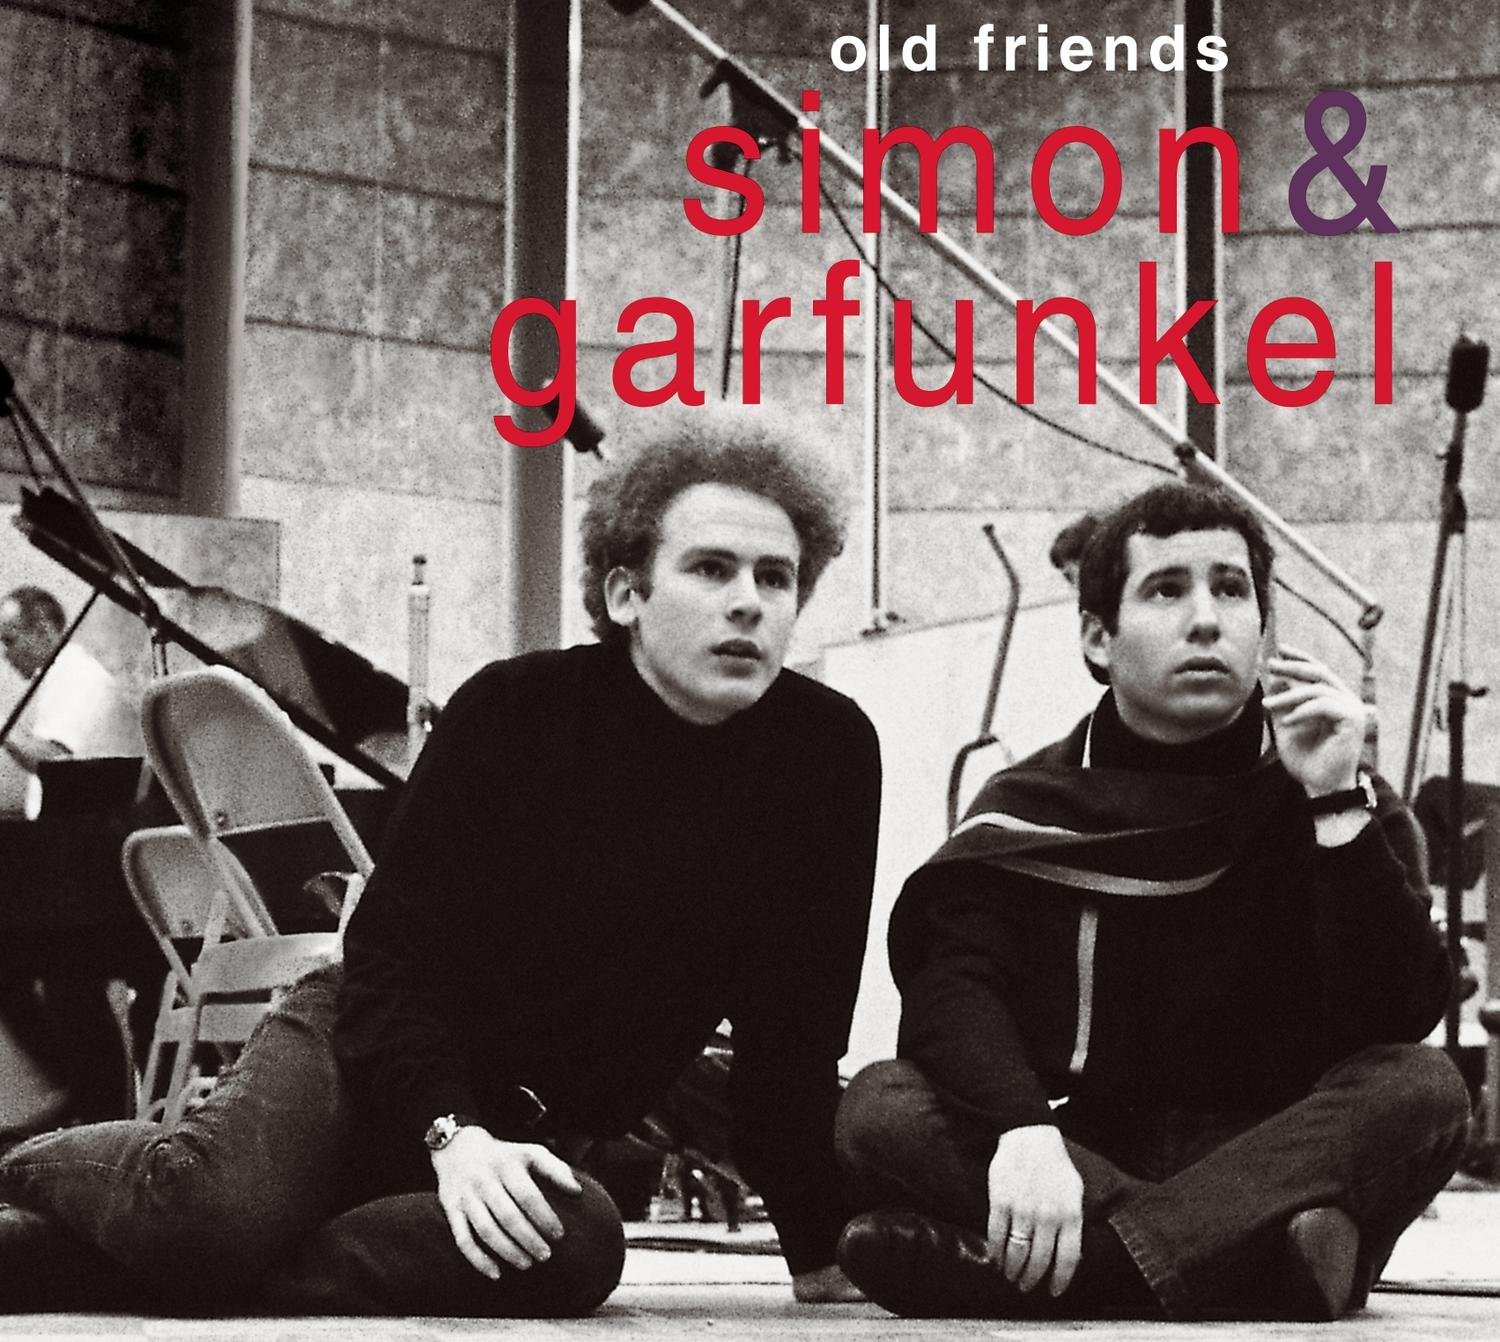 Simon & Garfunkel - Old Friends - Amazon.com Music